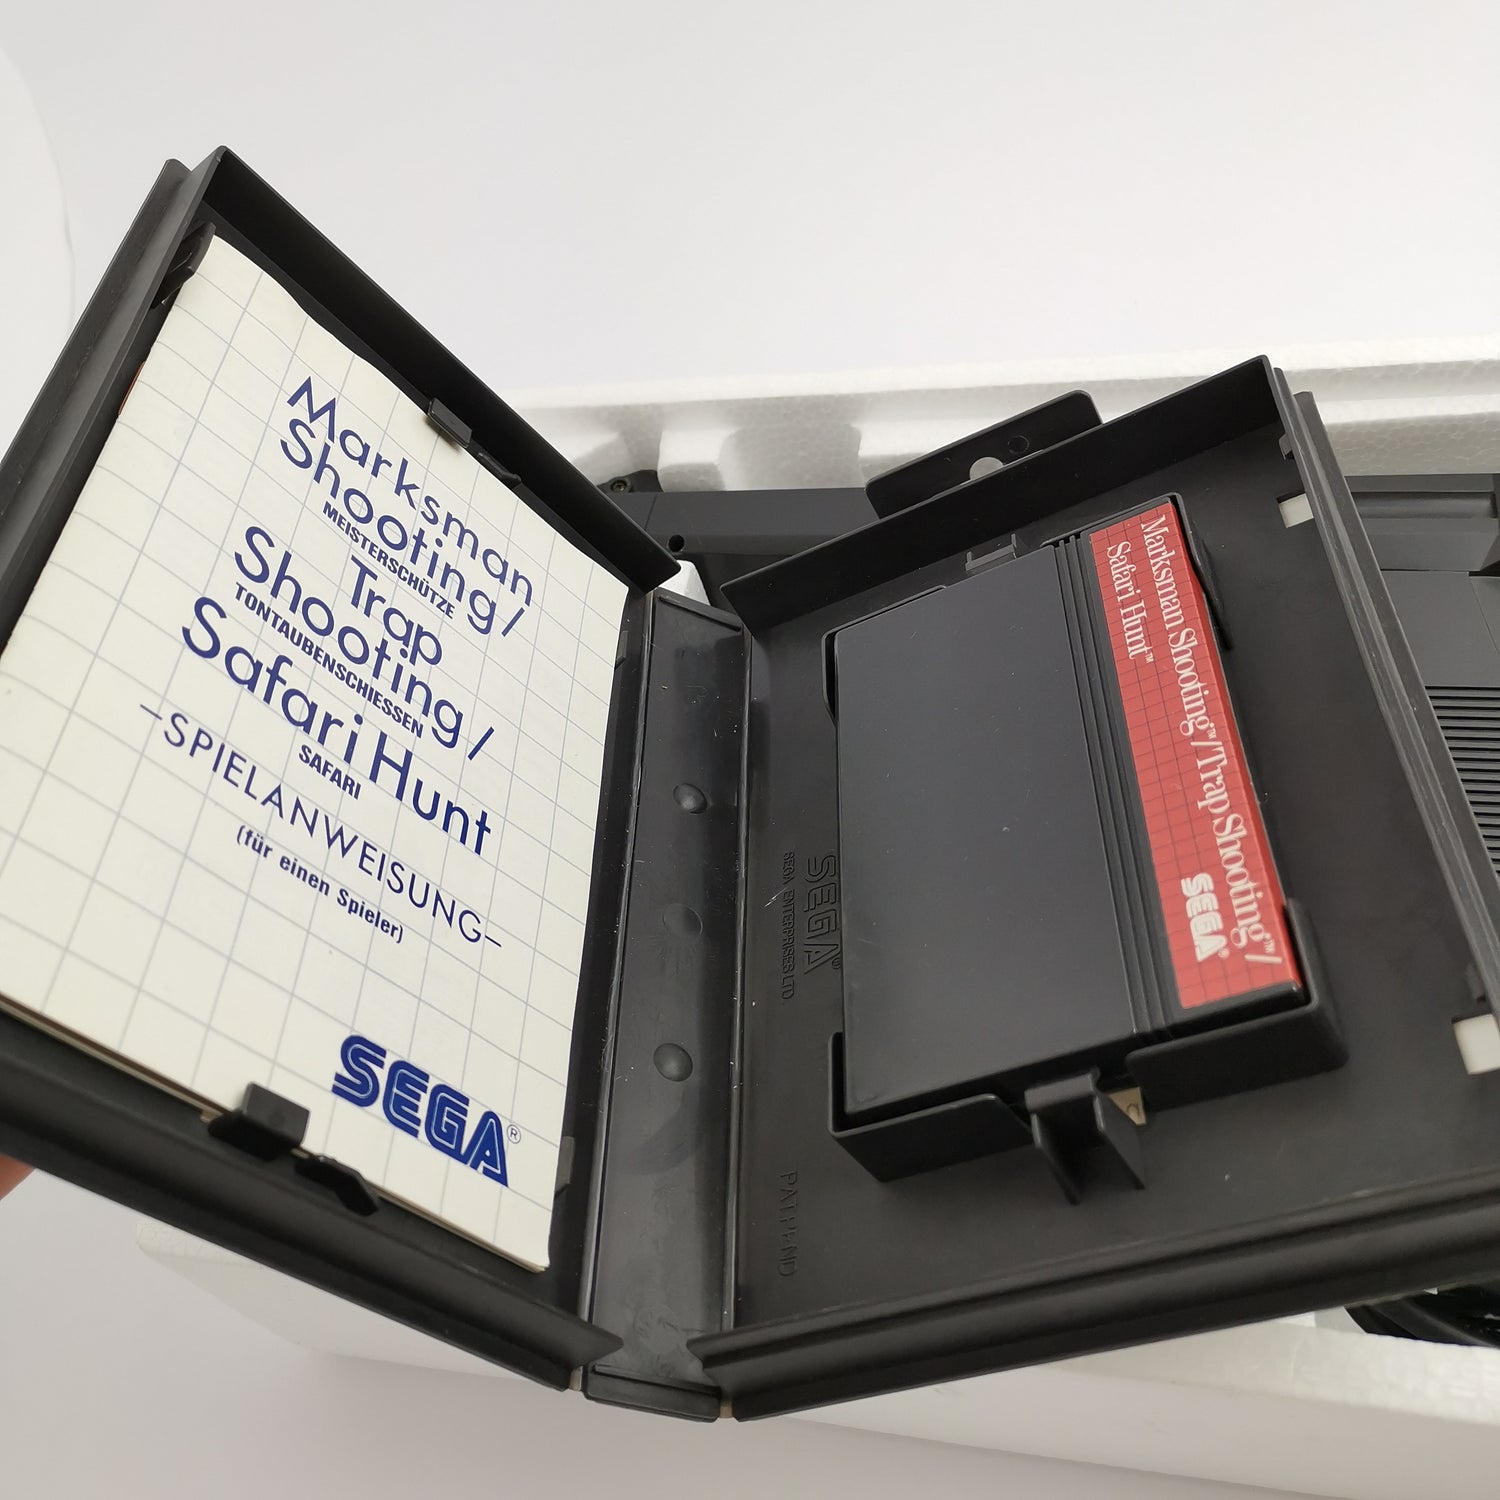 Sega Master System - The Sega Light Phaser Pistol | MasterSystem - OVP PAL